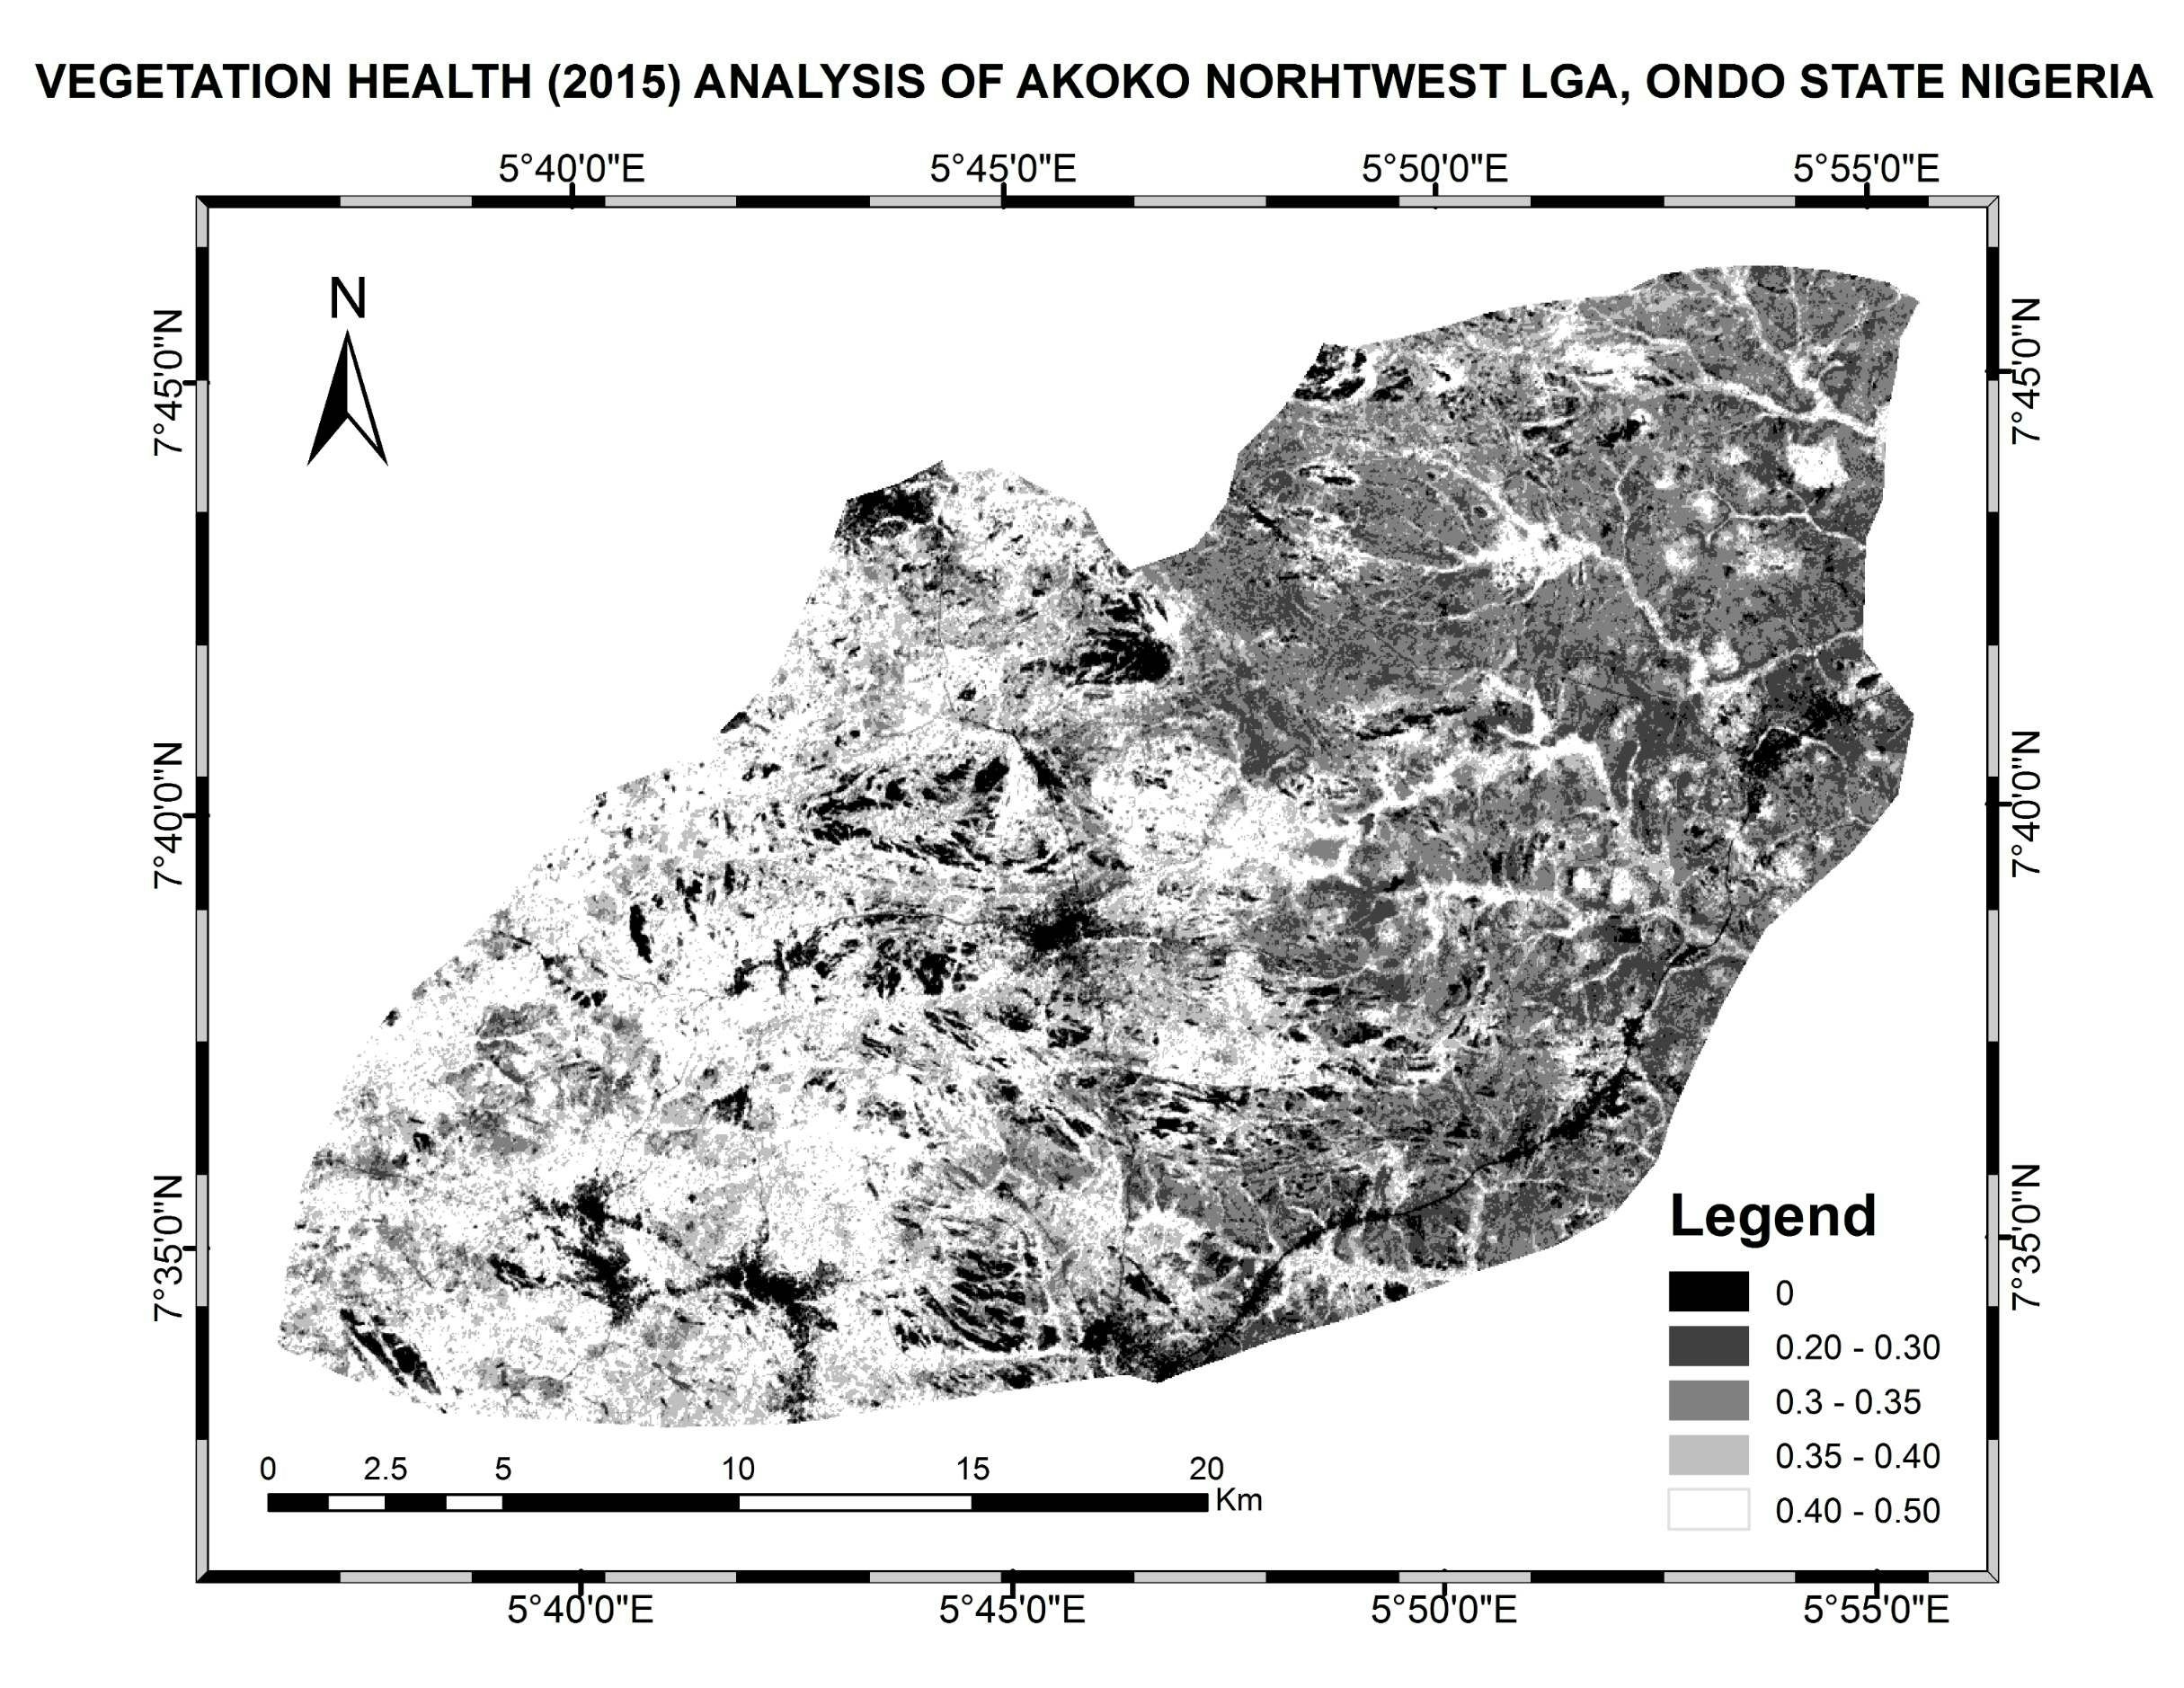 Vegetation Health Analysis using NDVI